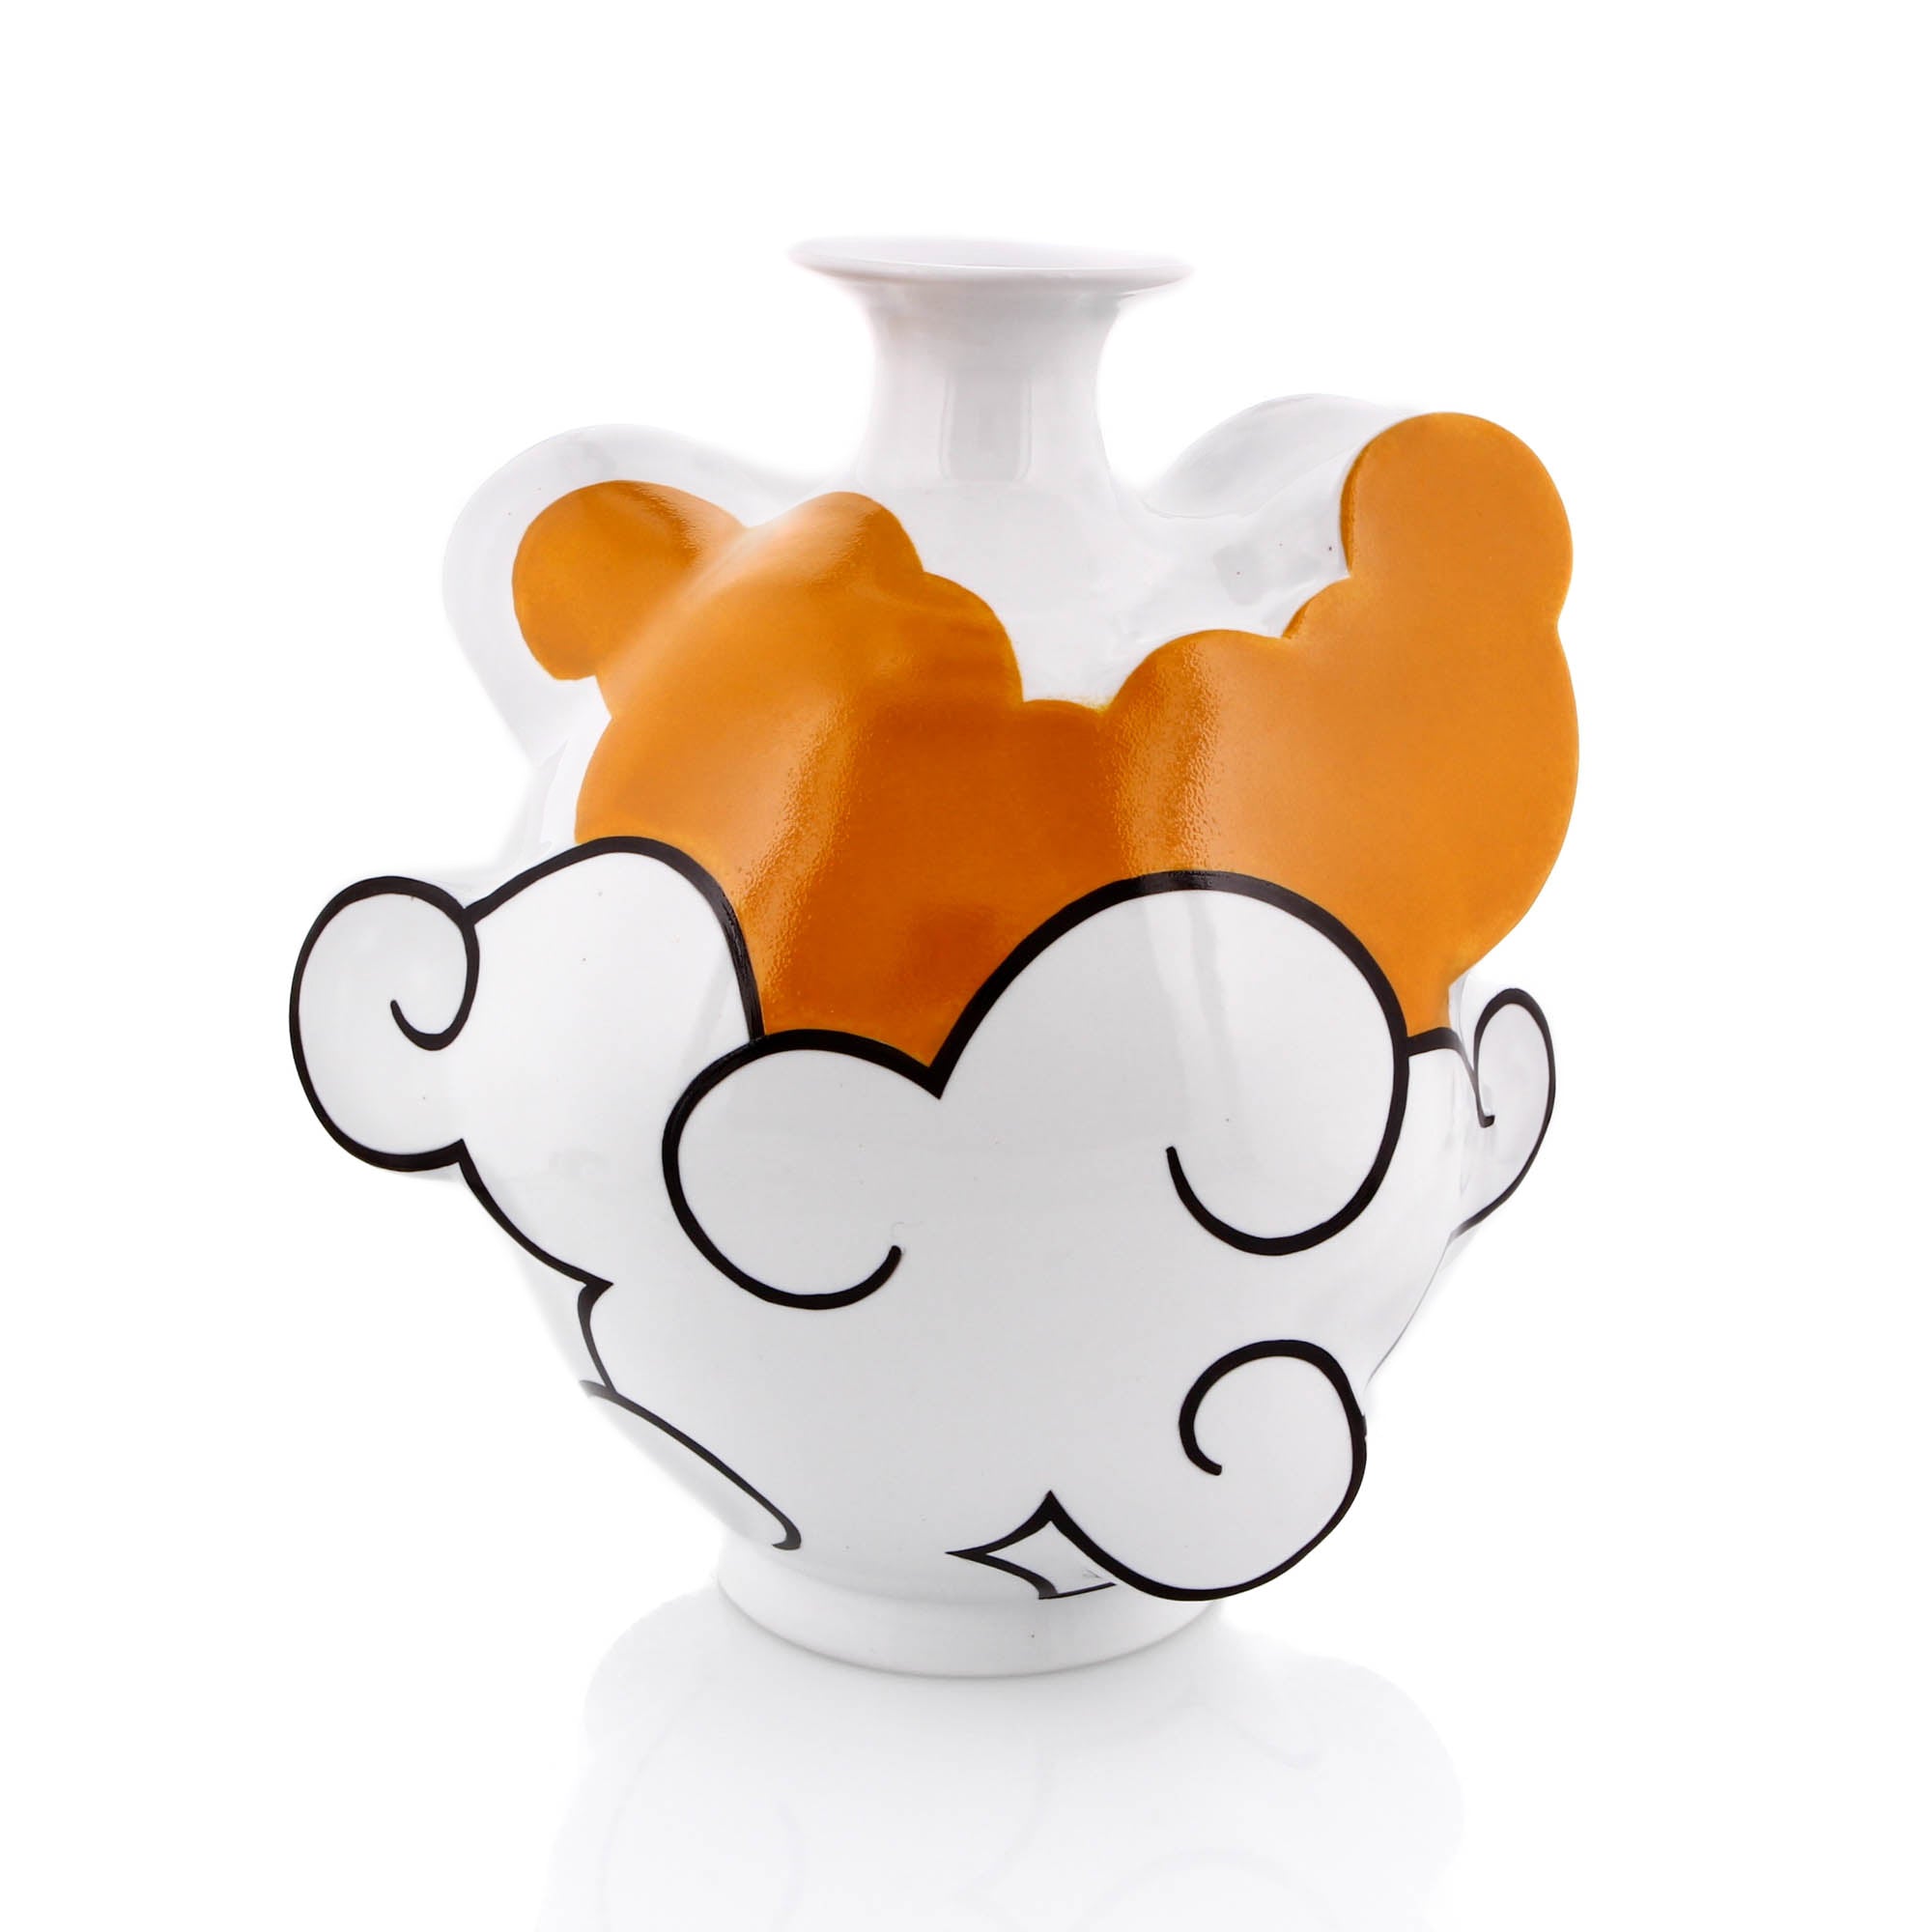 Sam Chung, Cloud Vase, Porcelain with Orange and Black 